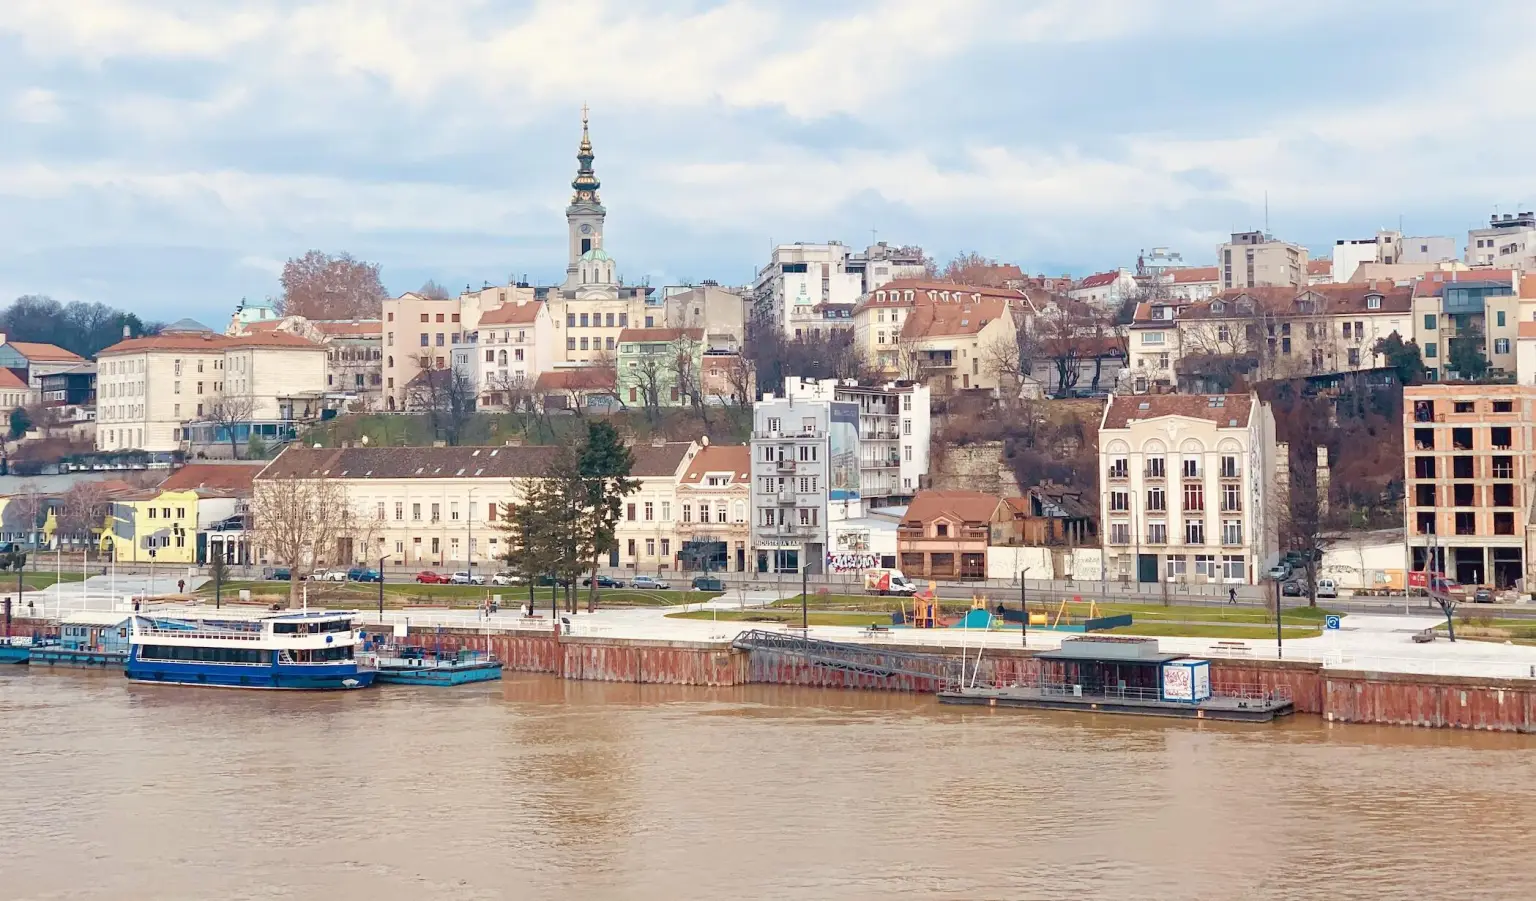 Views across Belgrade from Branko's Bridge